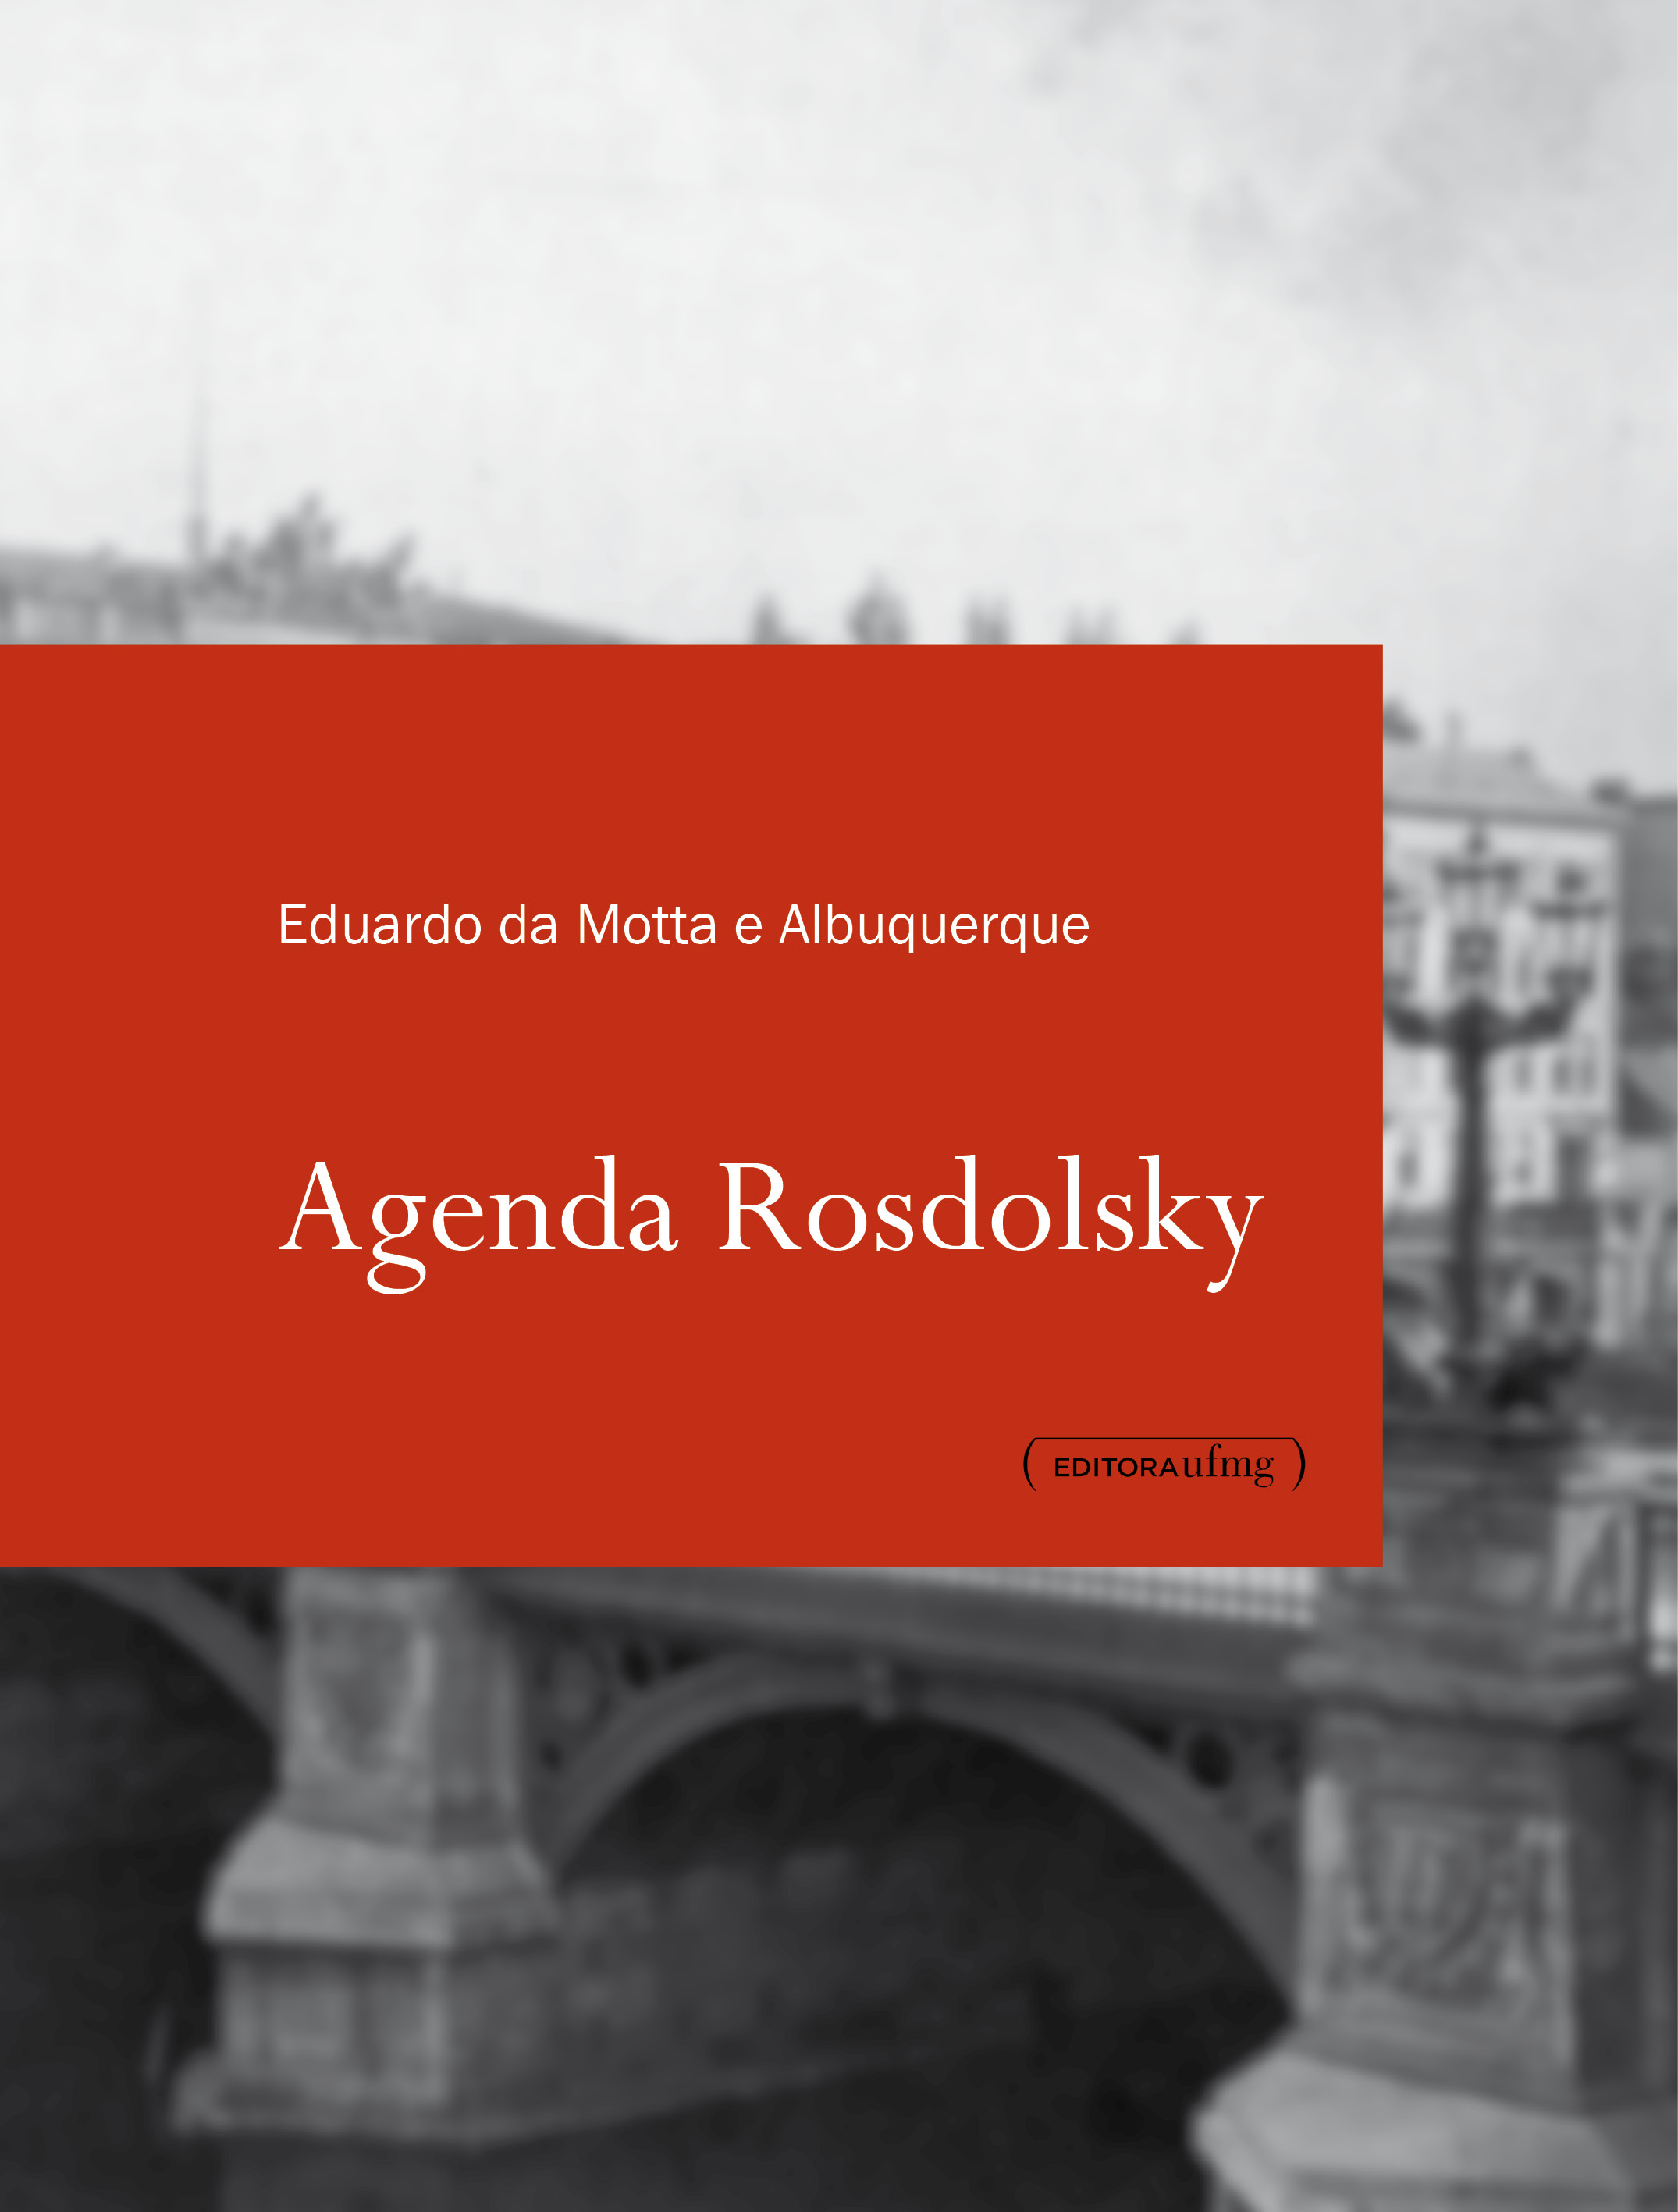 Agenda%20Rosdolsky_capa-divulg.jpg